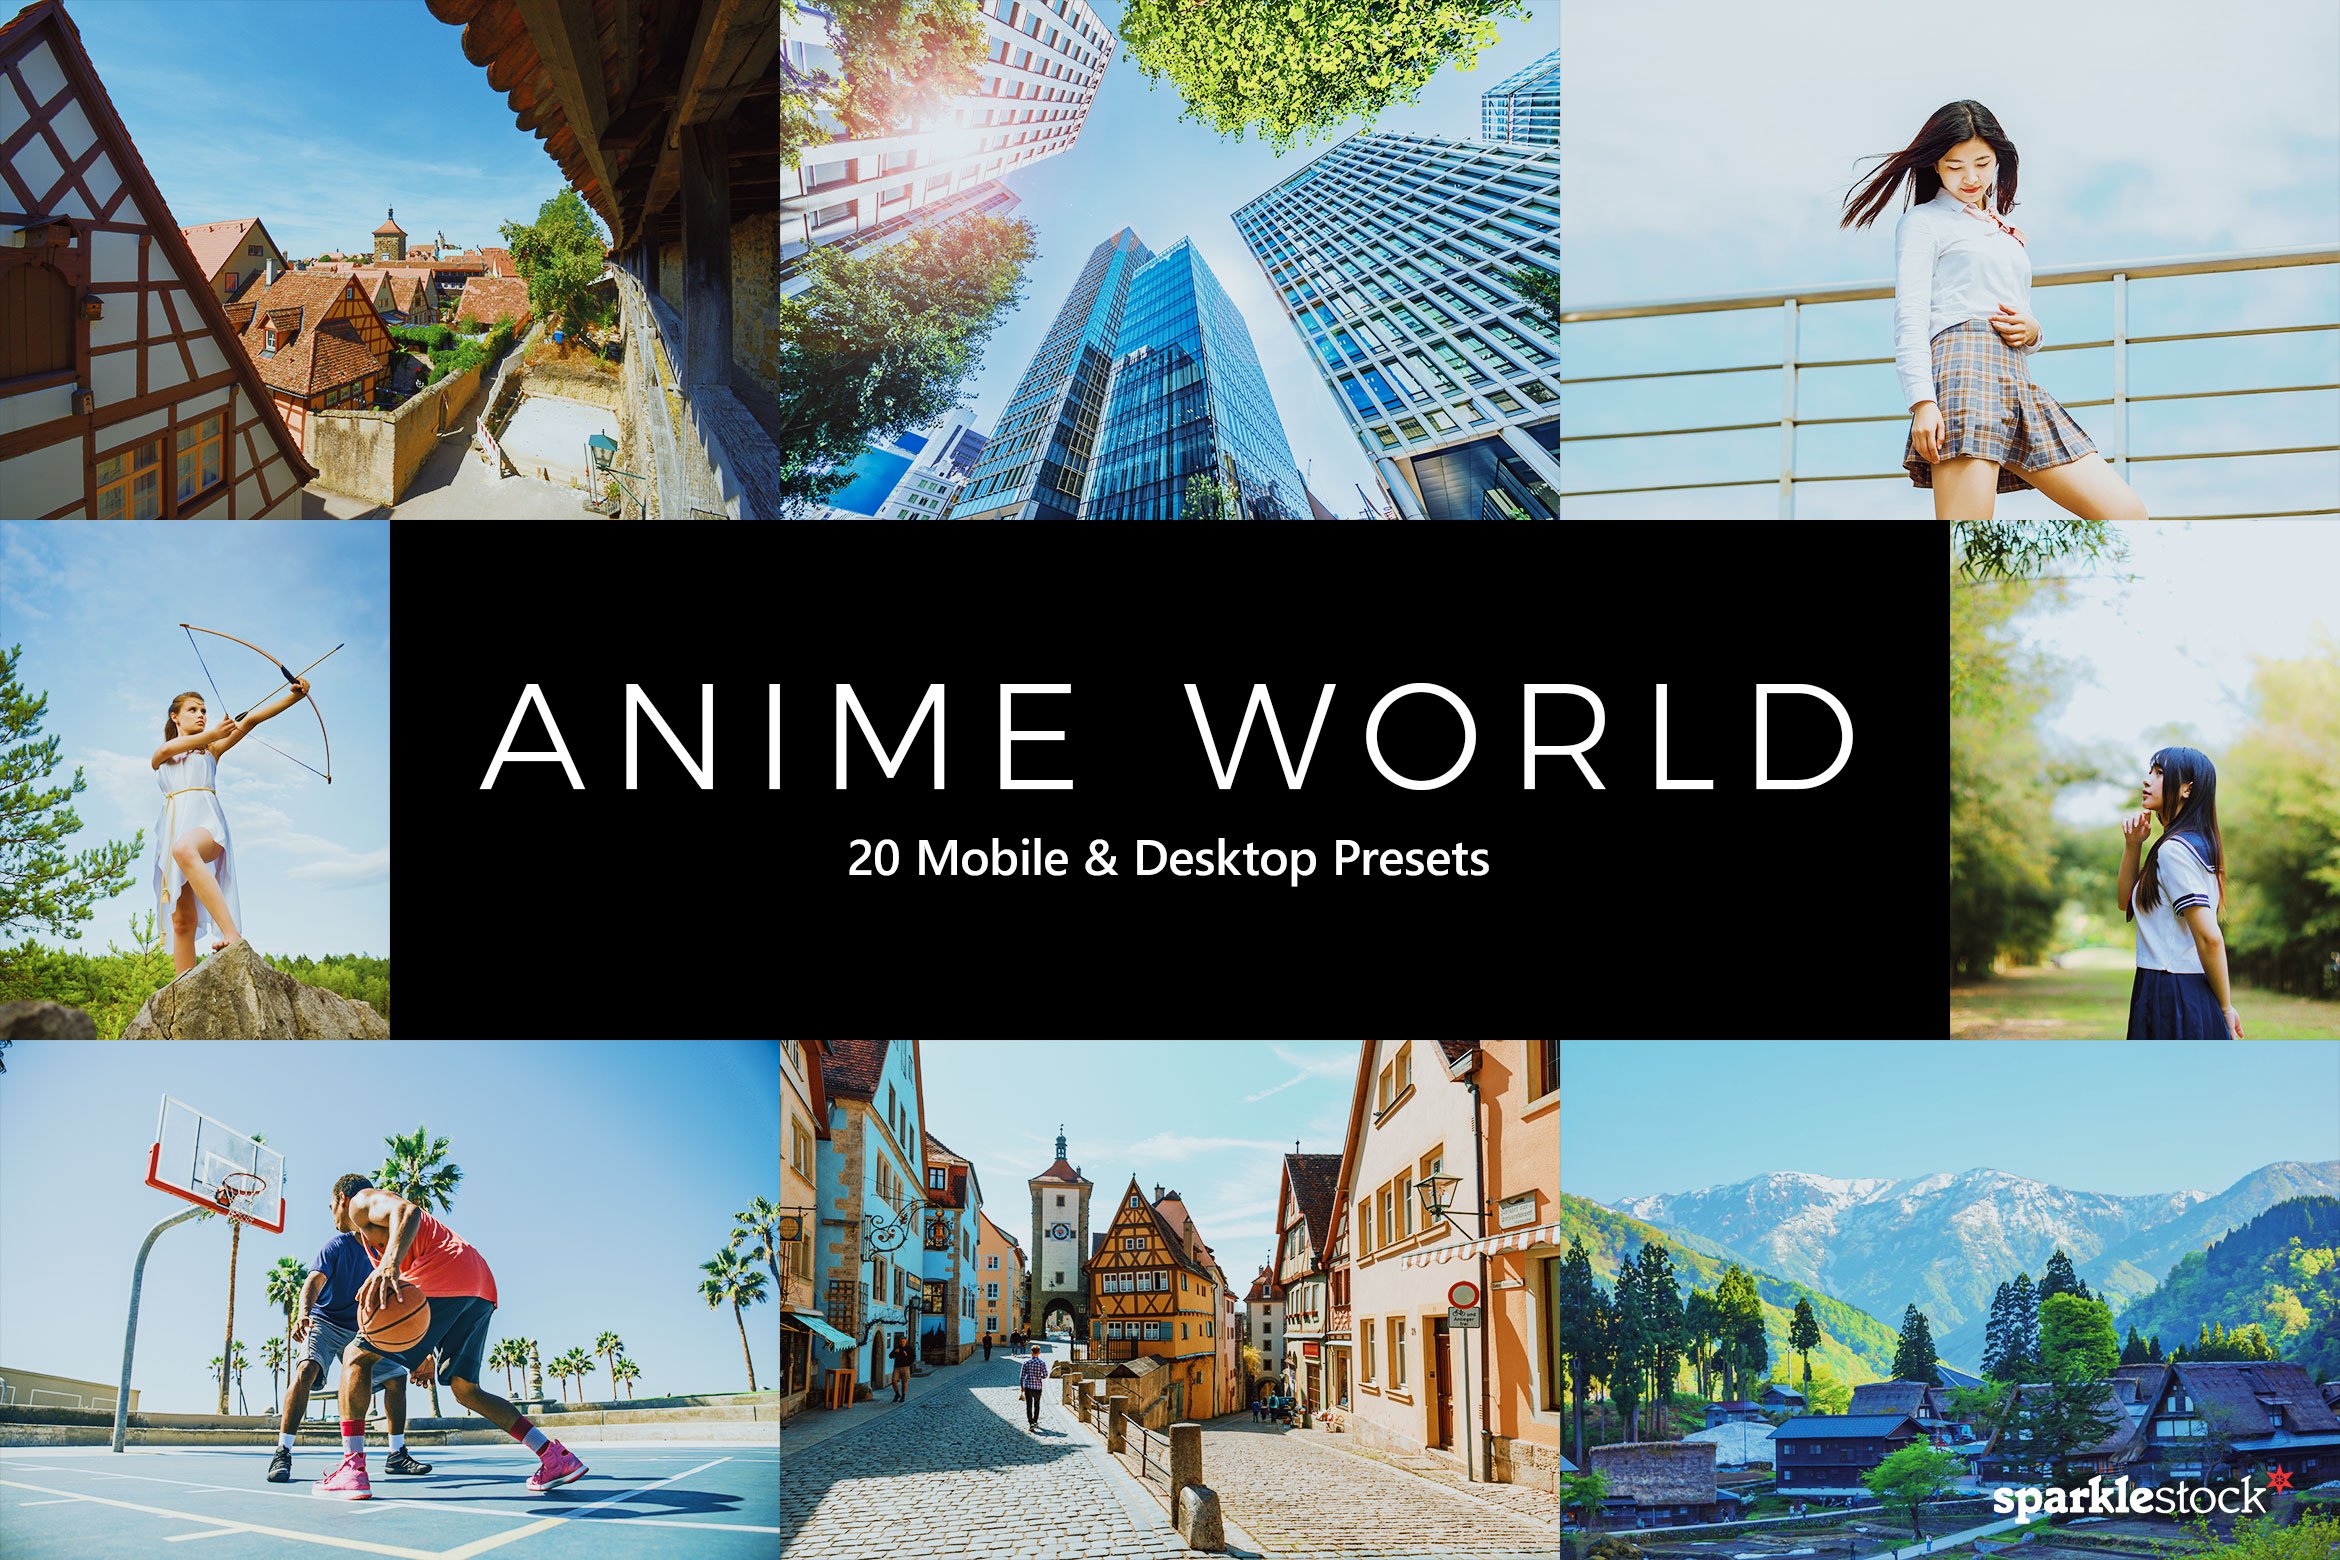 20  Anime World LR Presetscover image.